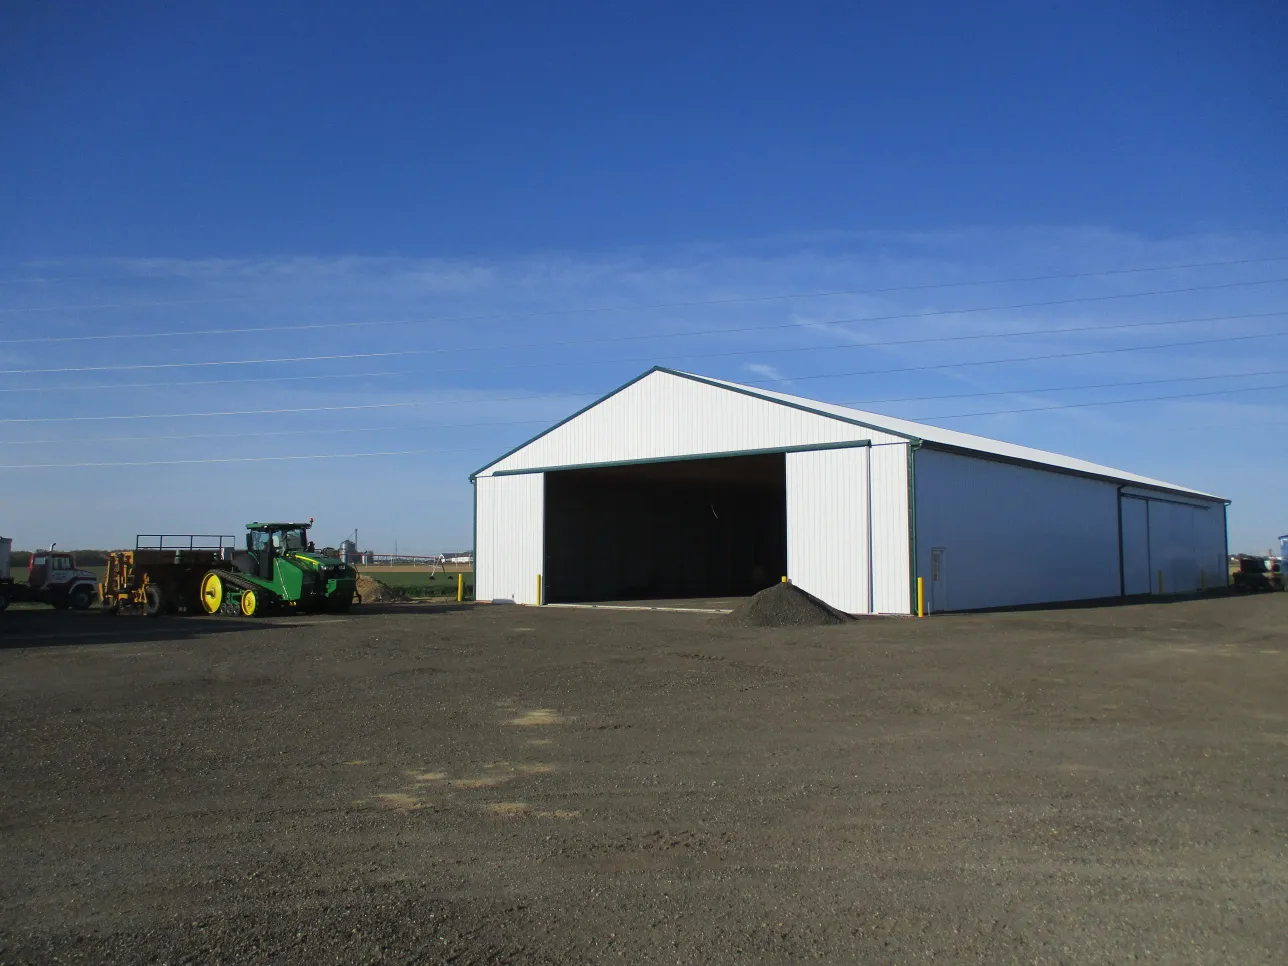 Elmer, NJ Pole Barn for Commercial Storage 2022